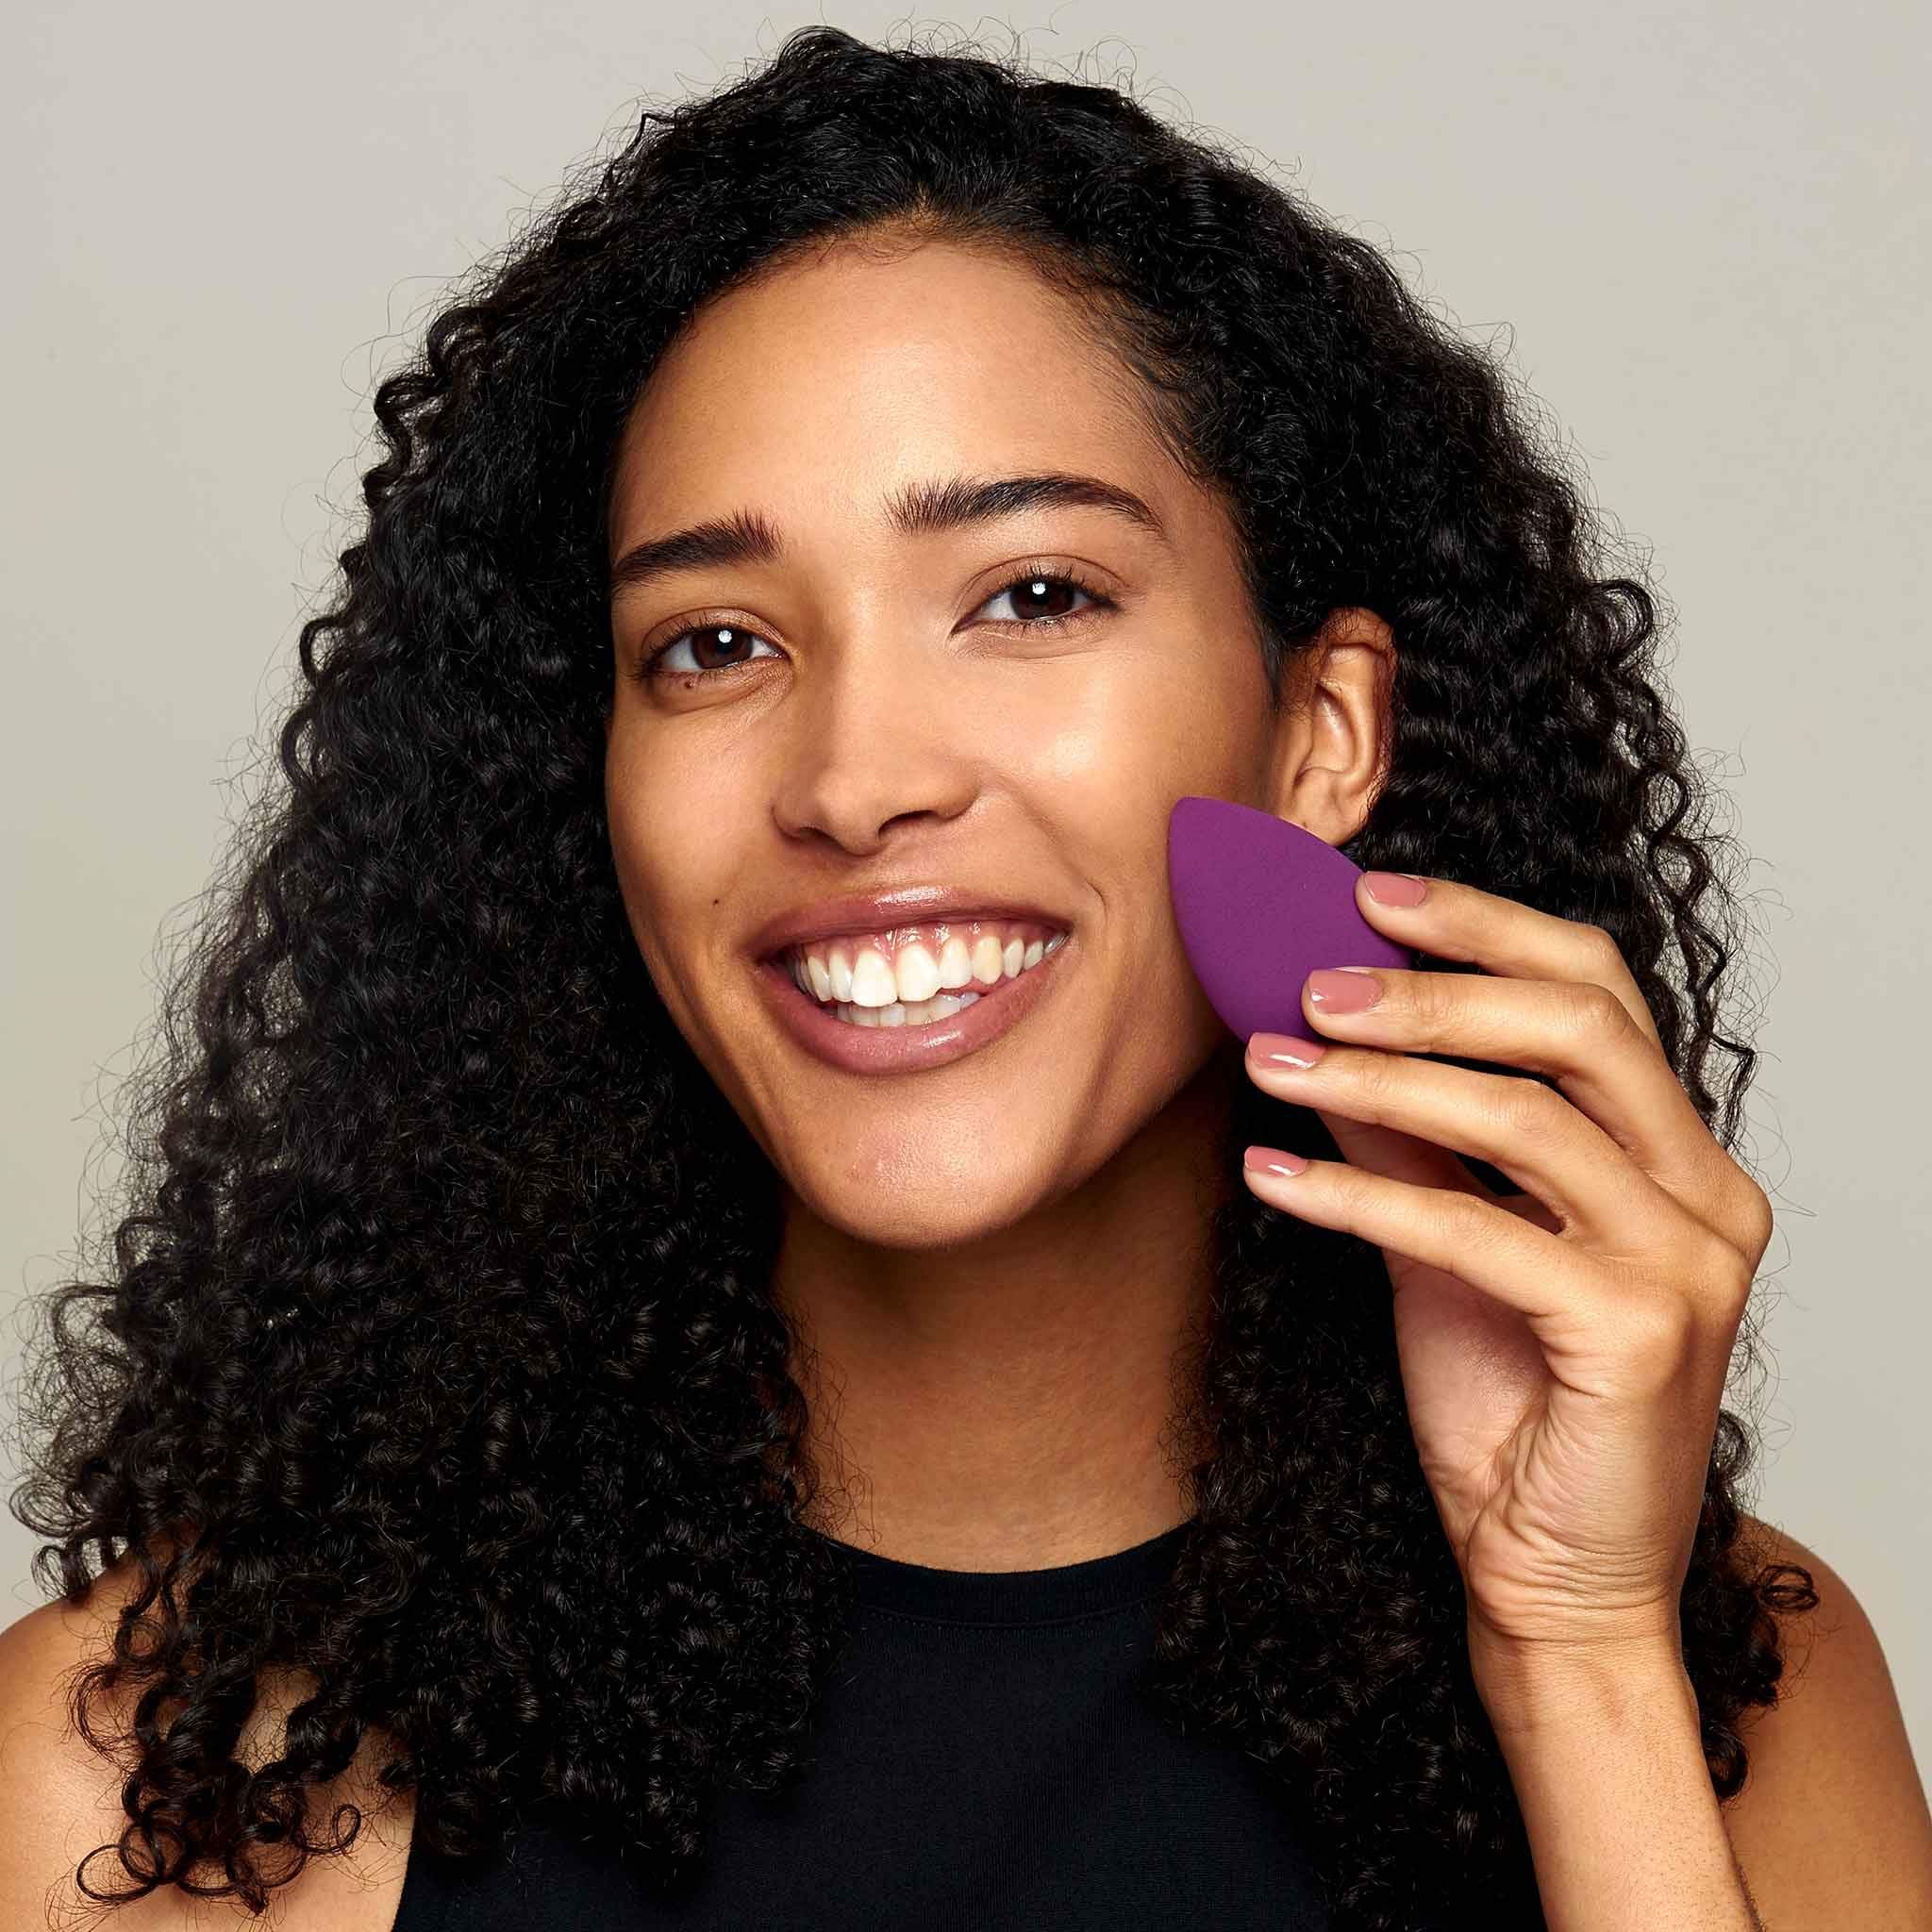 WUNDERBROW Makeup Beauty Sponge Blender Applicator Tool, Purple, 1 Count